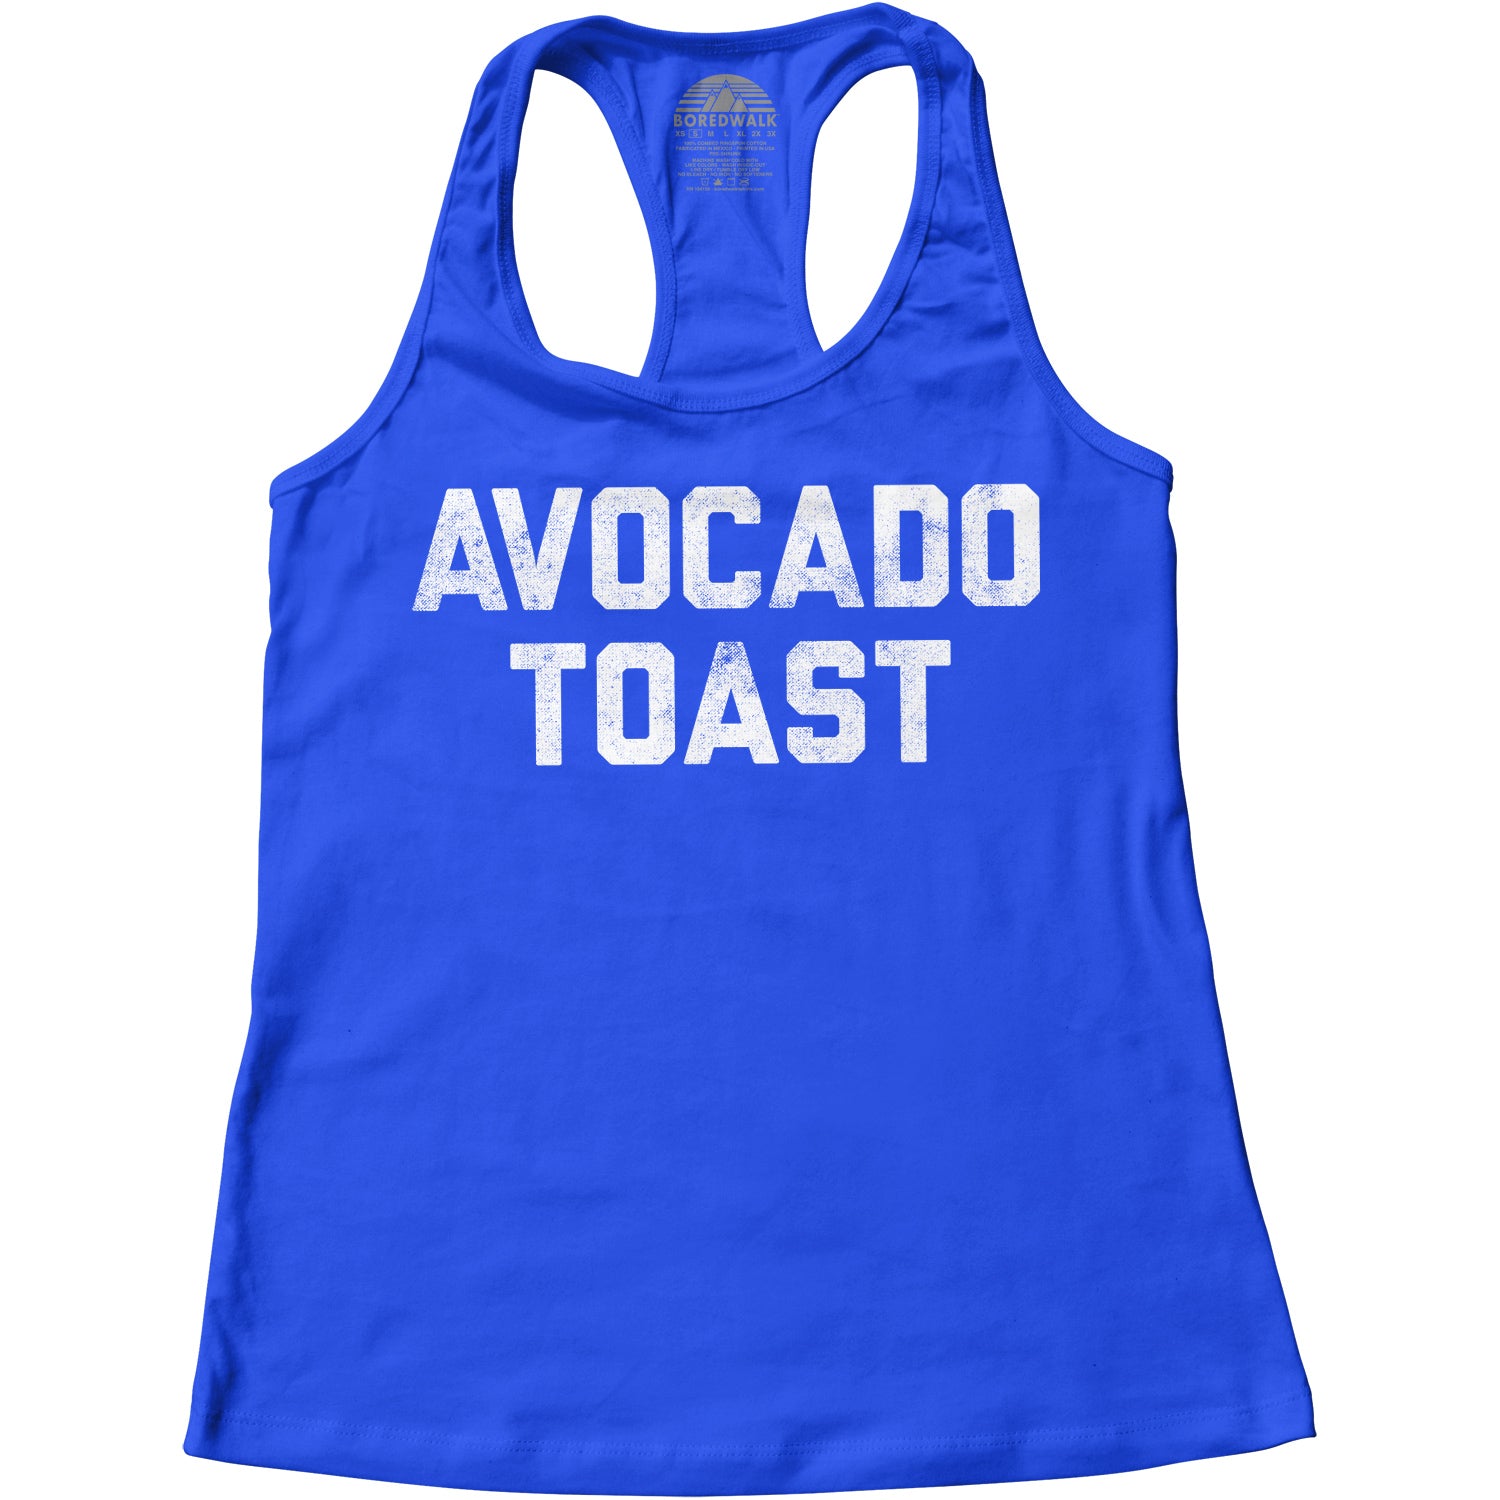 Women's Avocado Toast Racerback Tank Top